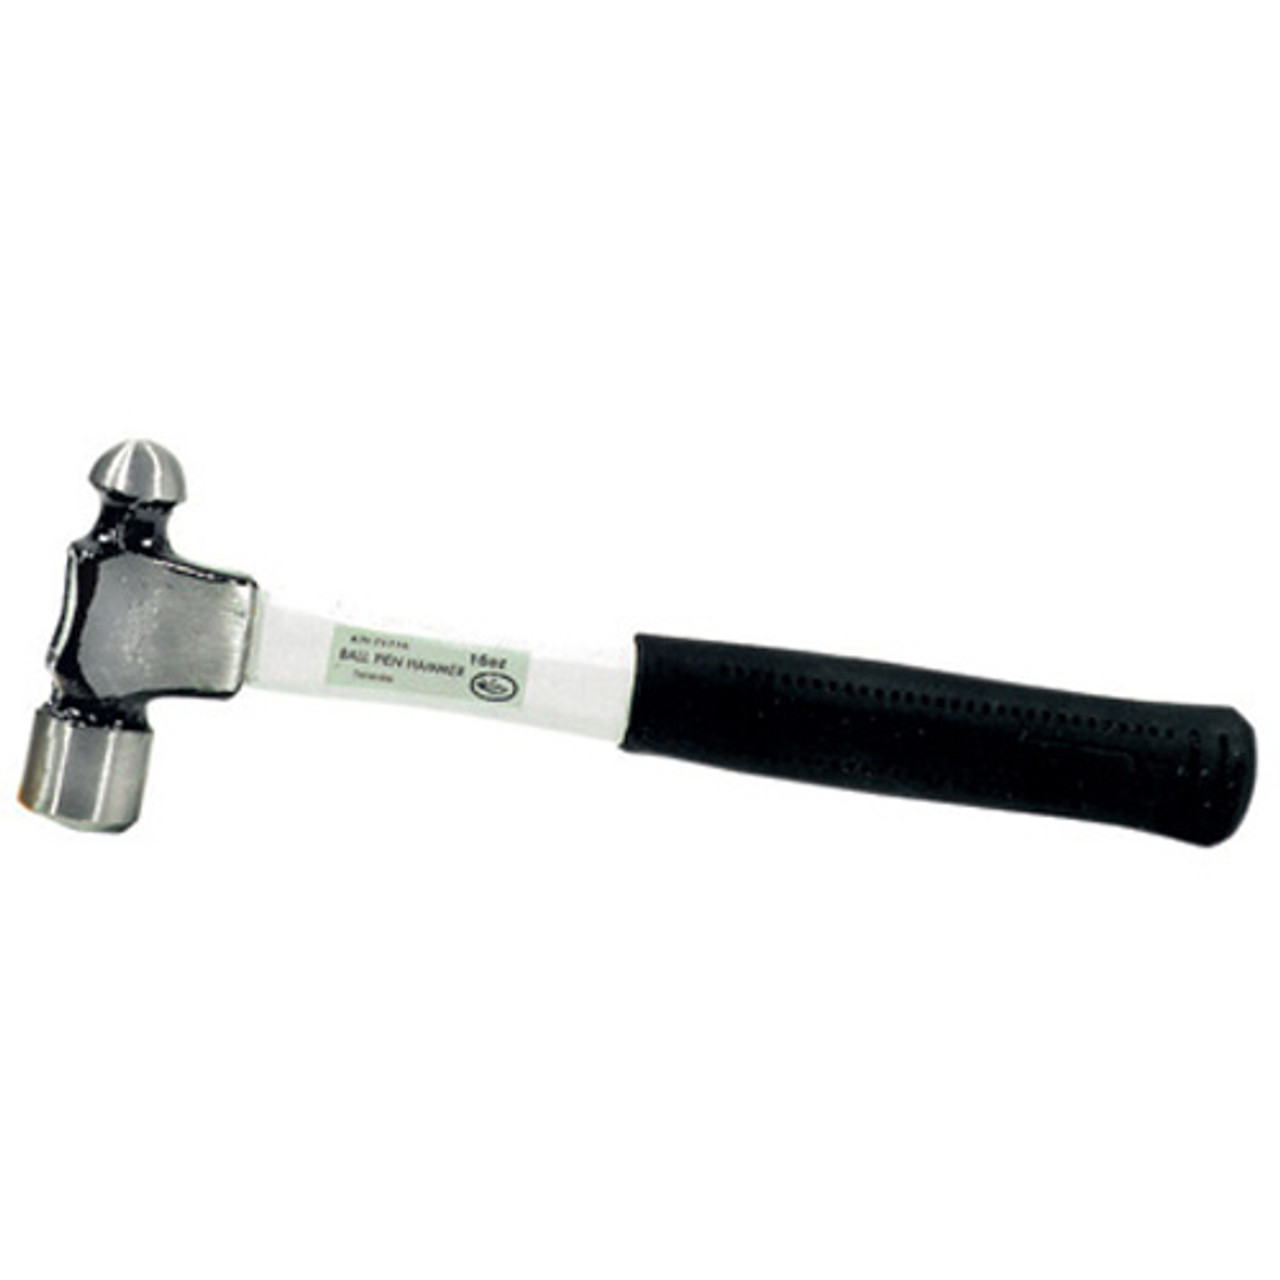 8 oz. Ball Pein Hammer with Fiberglass Handle